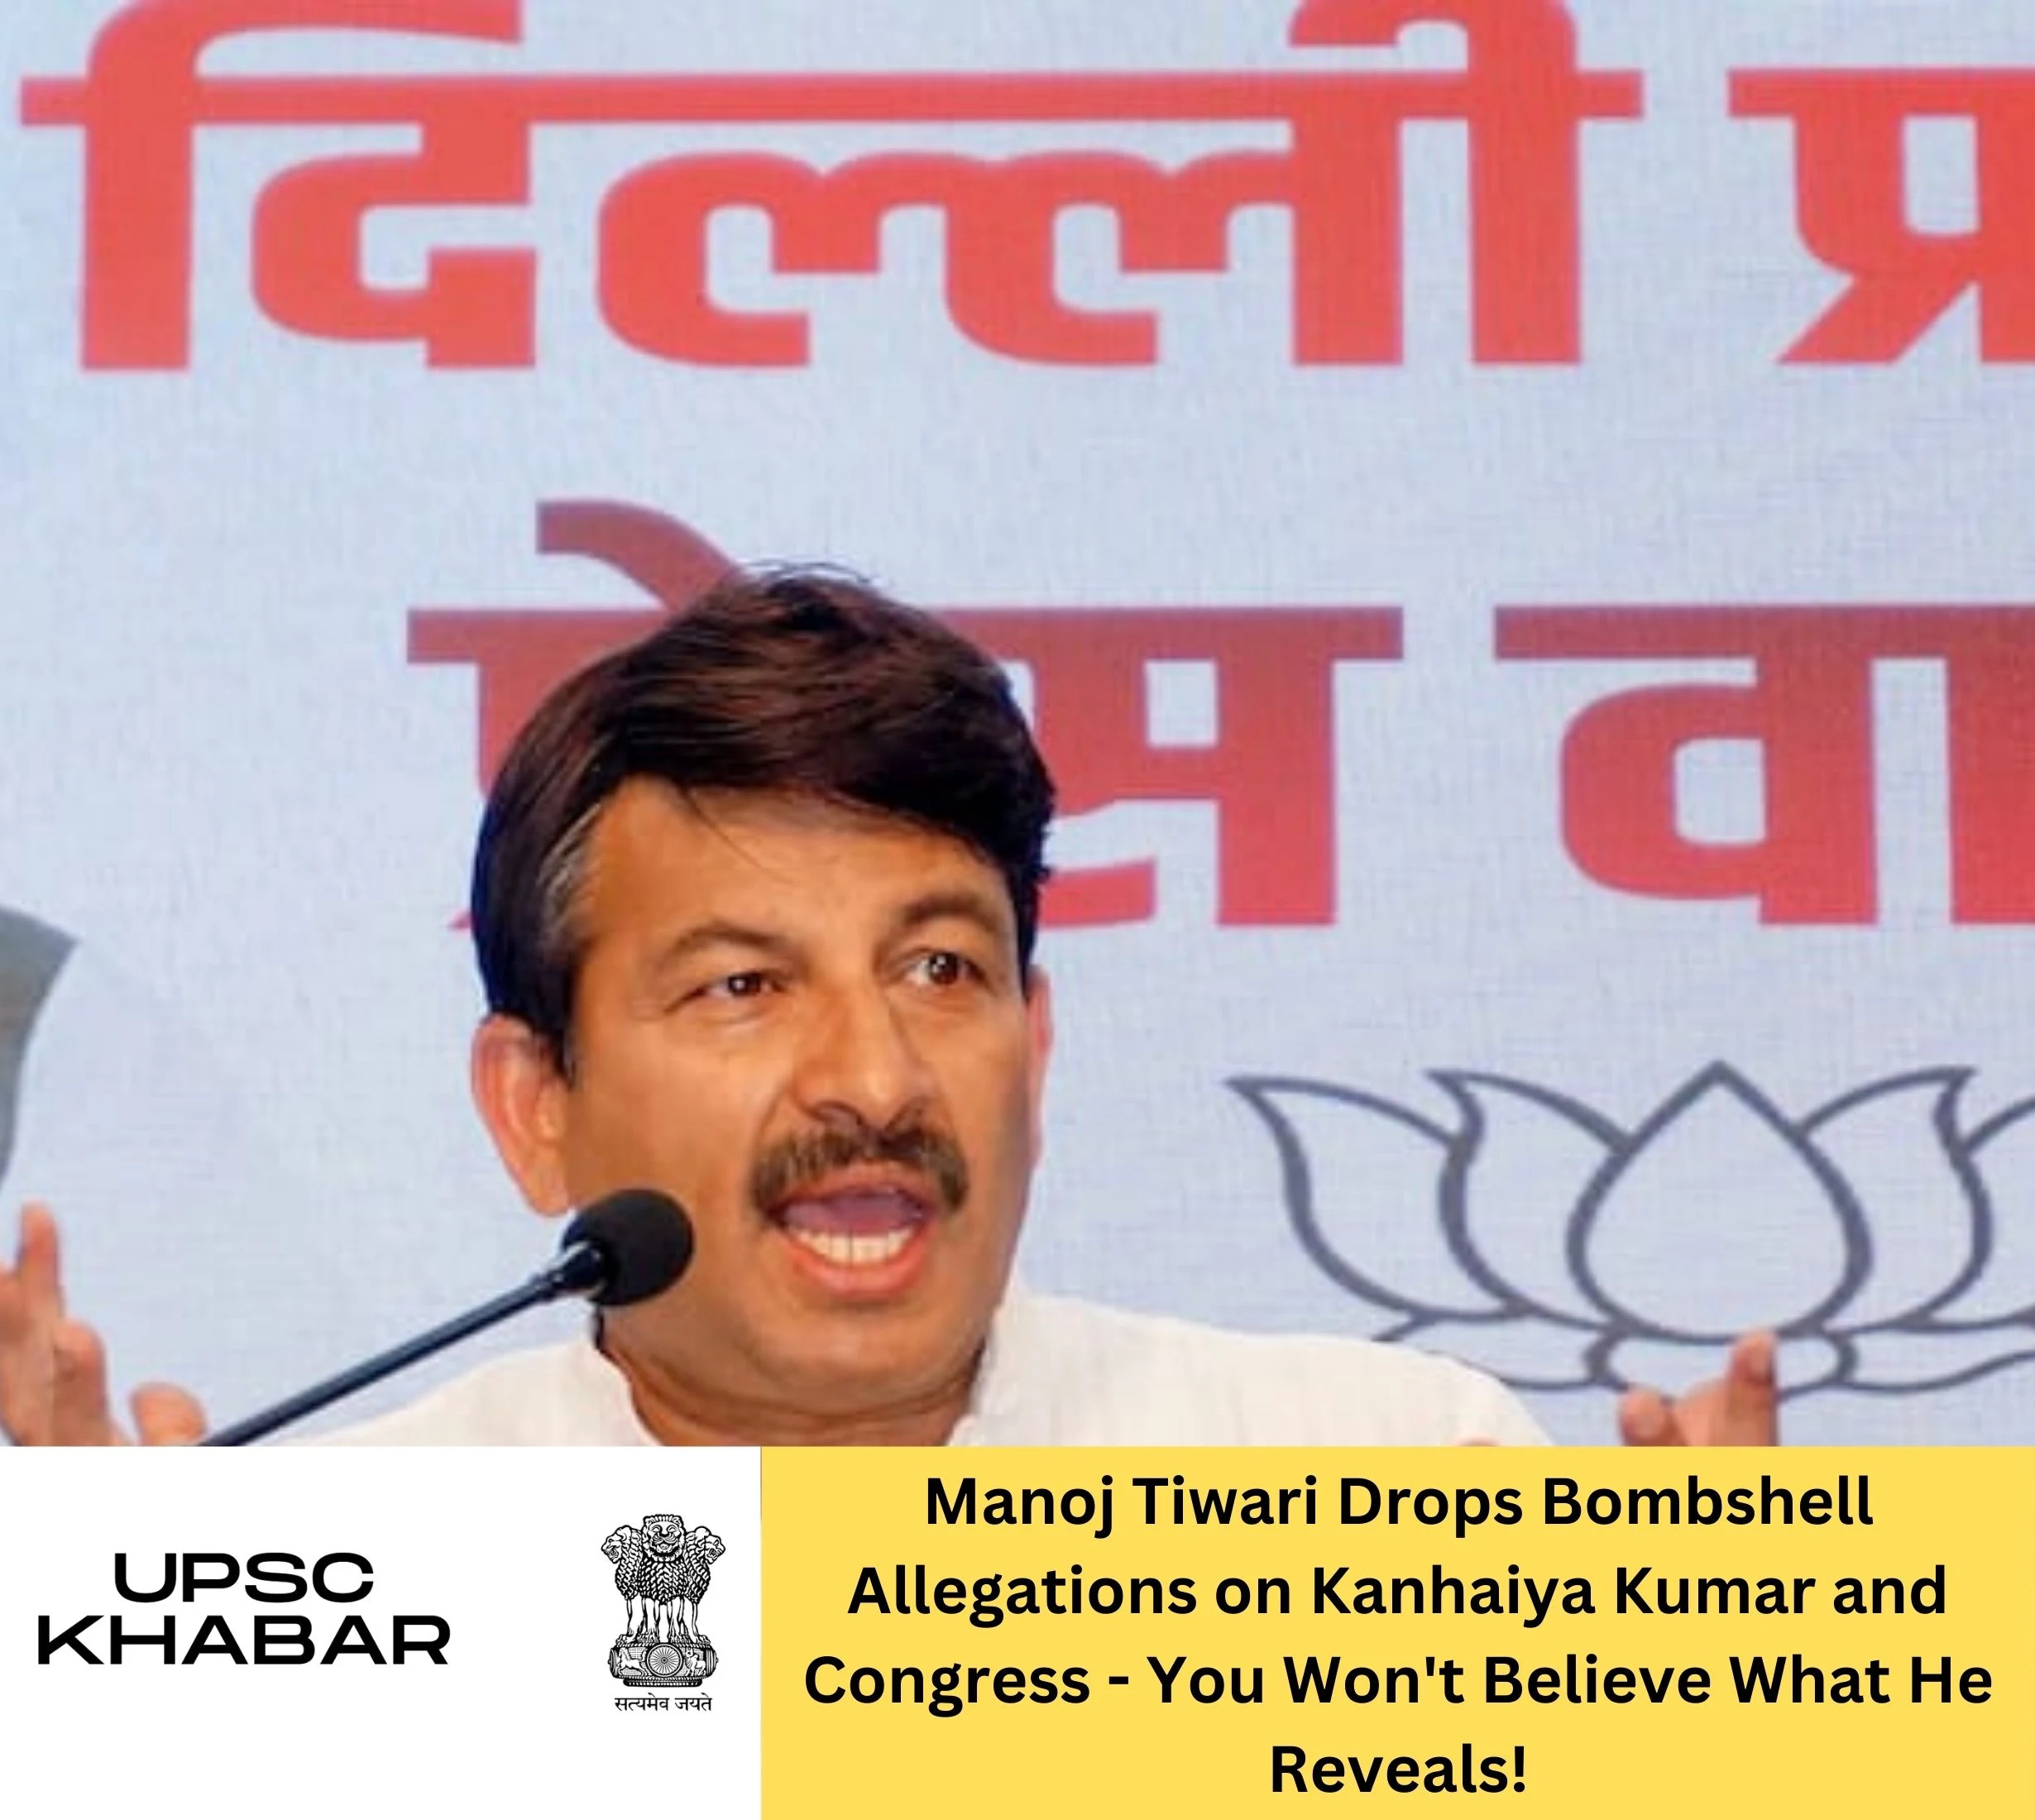 Manoj Tiwari Drops Bombshell Allegations on Kanhaiya Kumar and Congress - You Won't Believe What He Reveals!